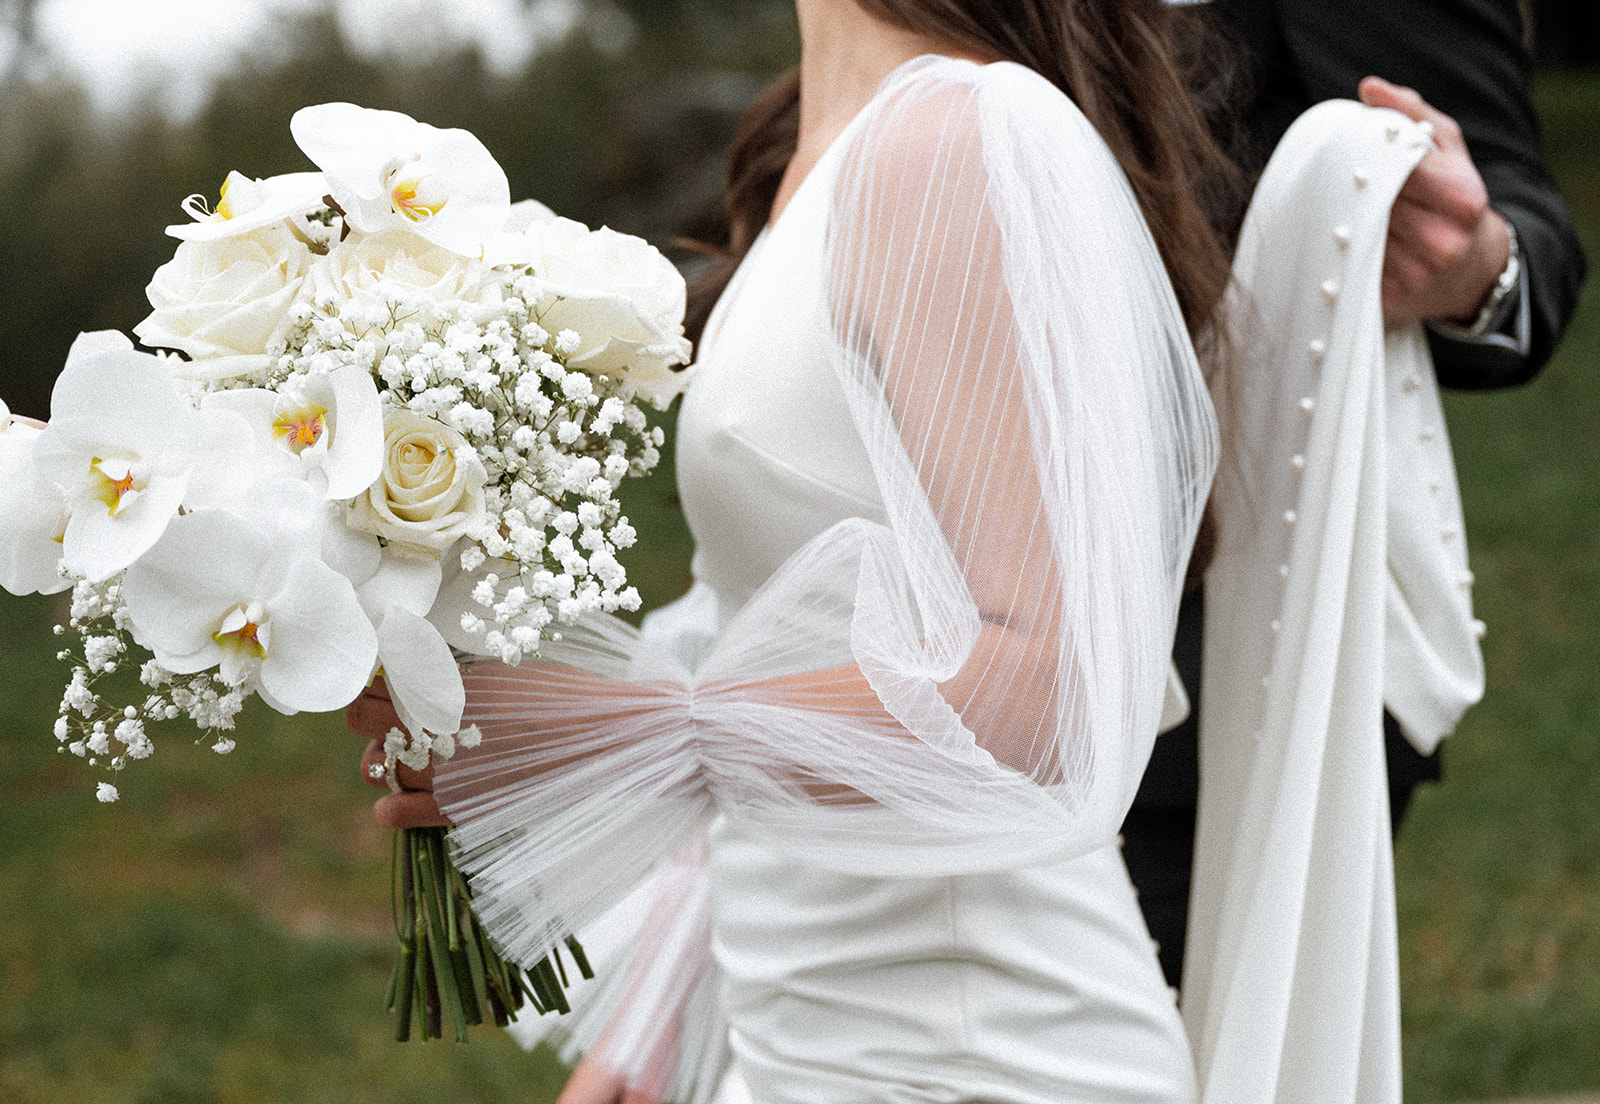 This Bride’s Olia Zavozina Wedding Dress Will Leave You Speechless